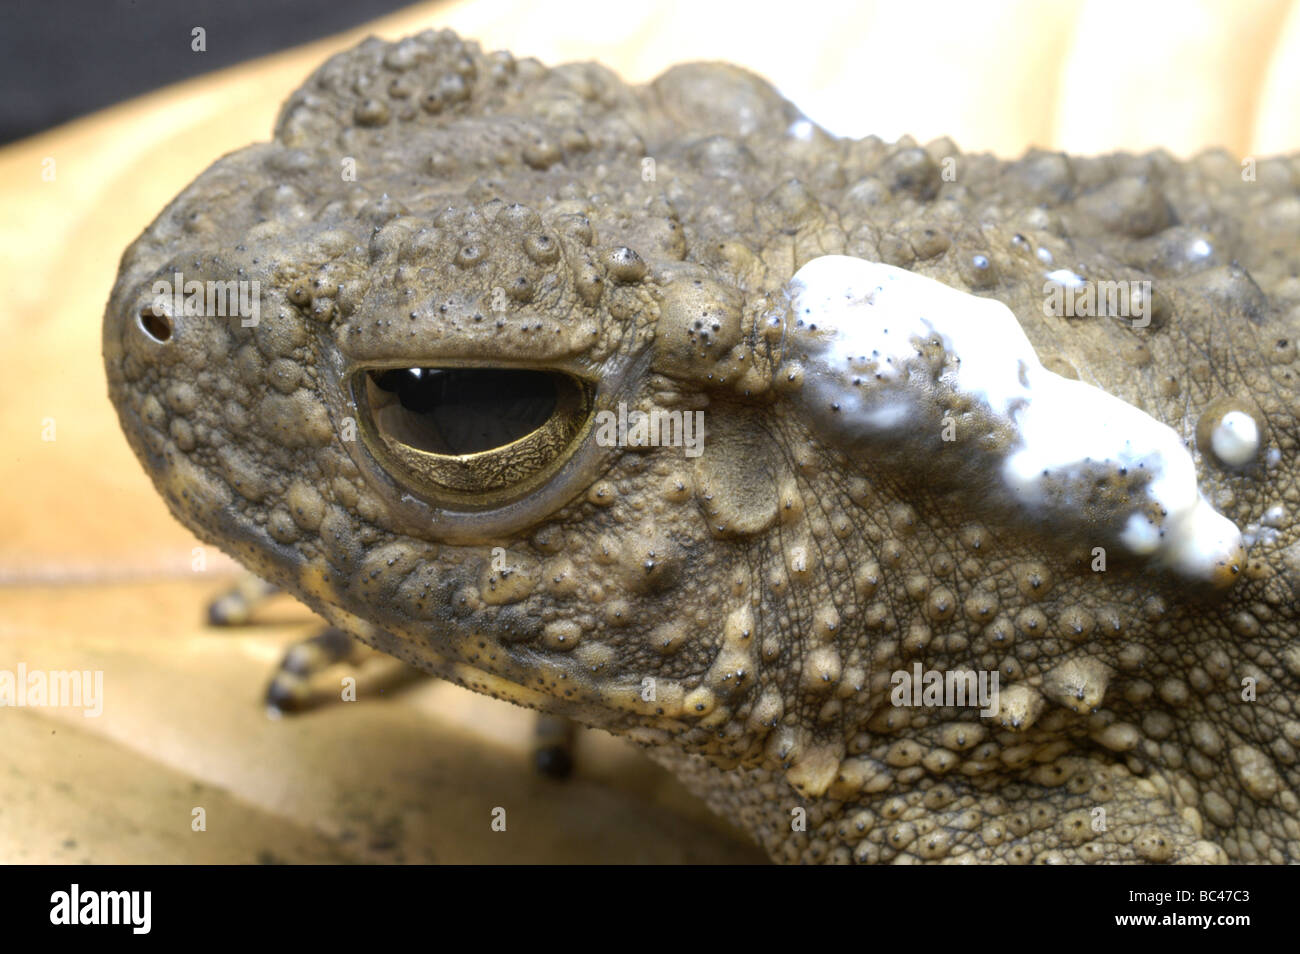 Giant River Toad, Bufo juxtasper Stock Photo